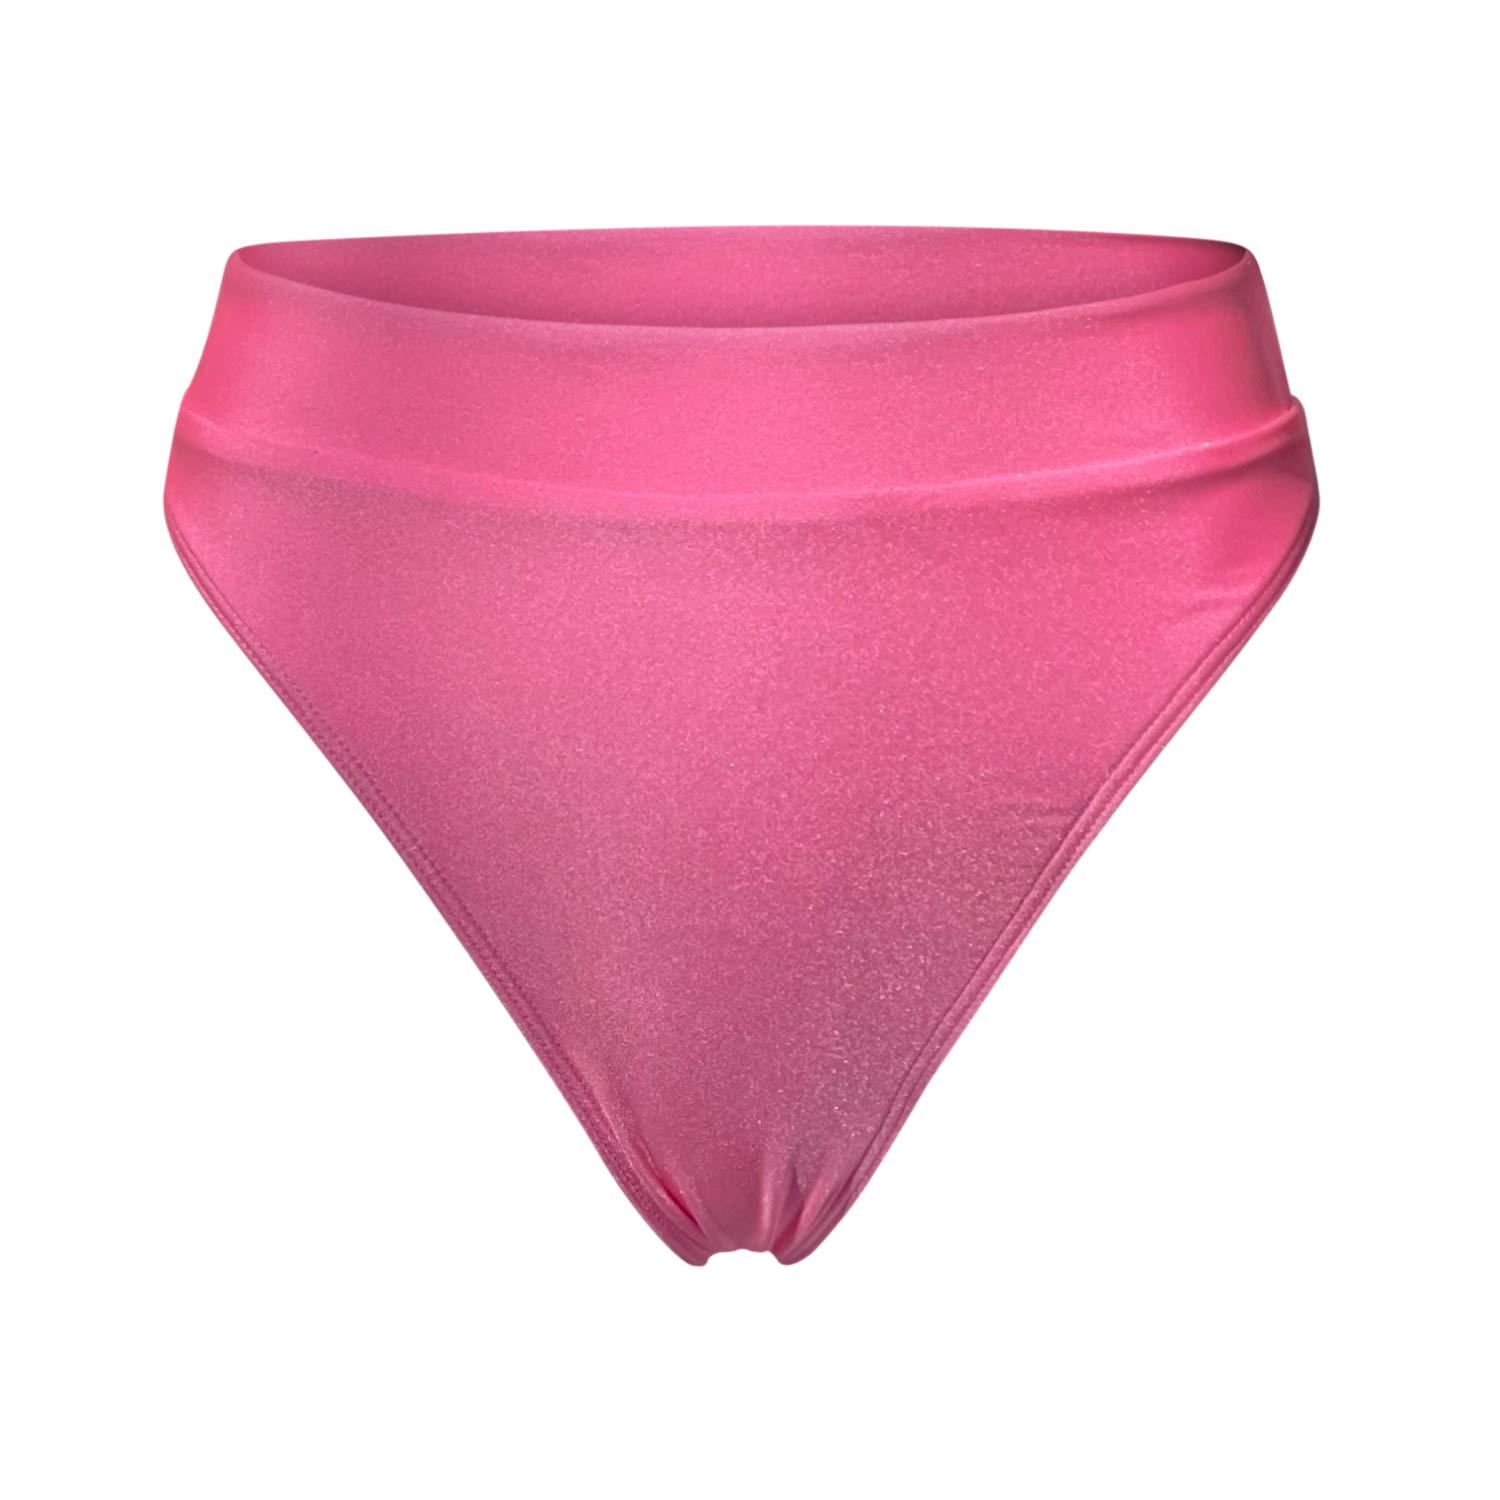 Madeleine Simon Studio Women's Pink / Purple Pink Cheeky High Waist Sporty Bikini Bottom